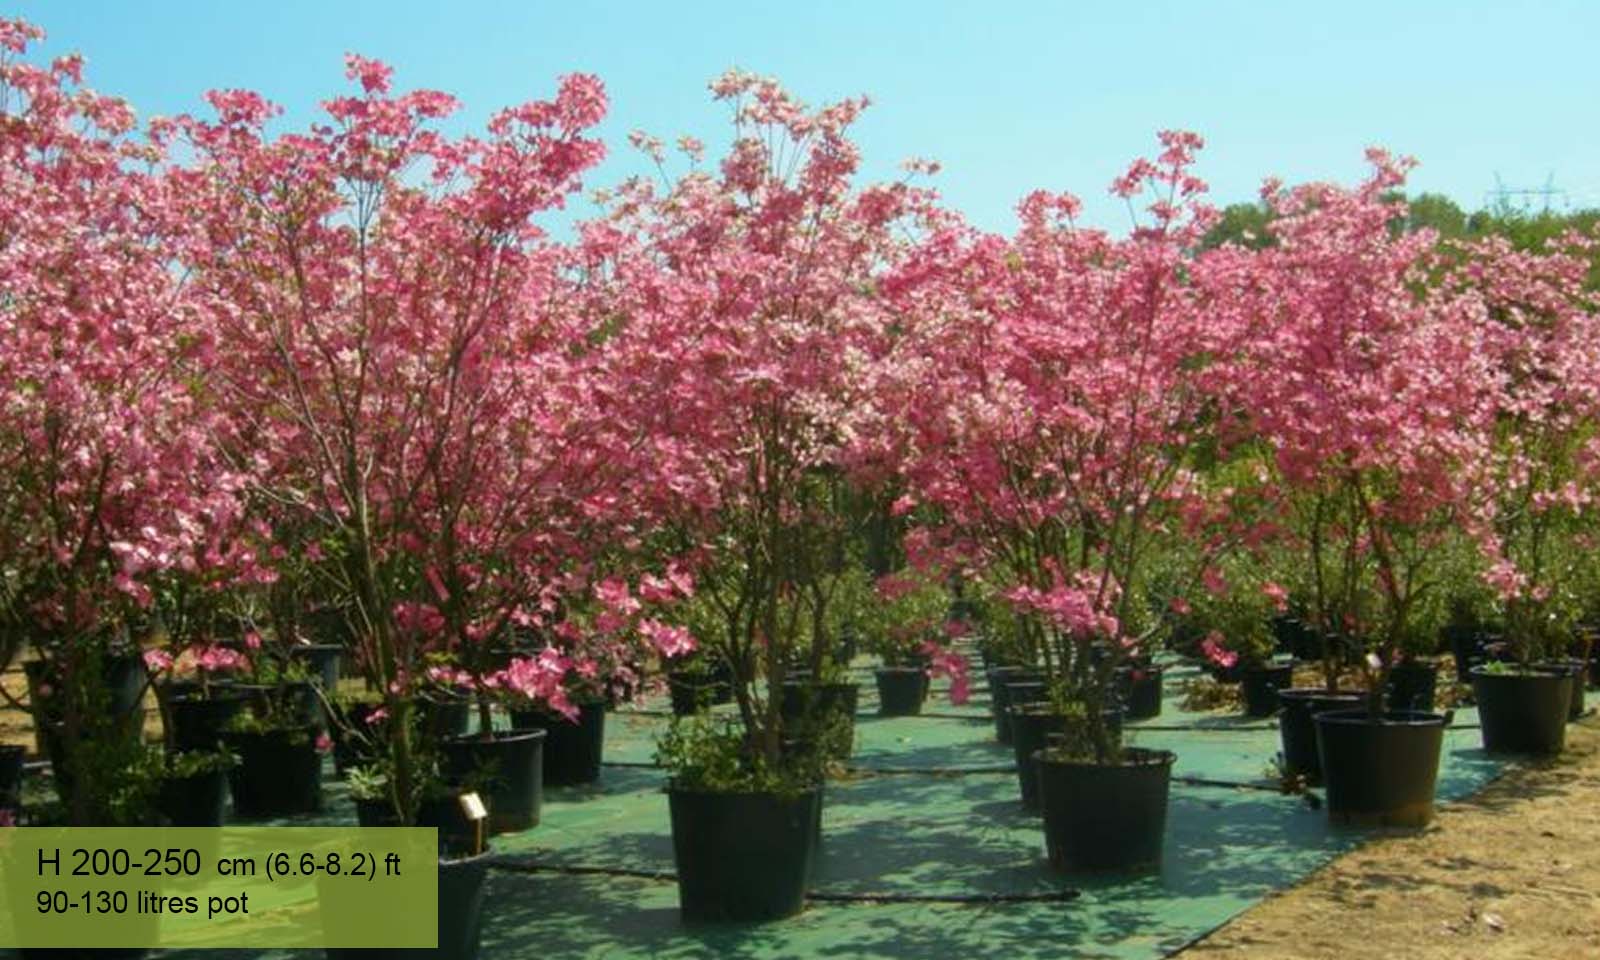 Cornus Florida Rubra (Flowering Dogwood)